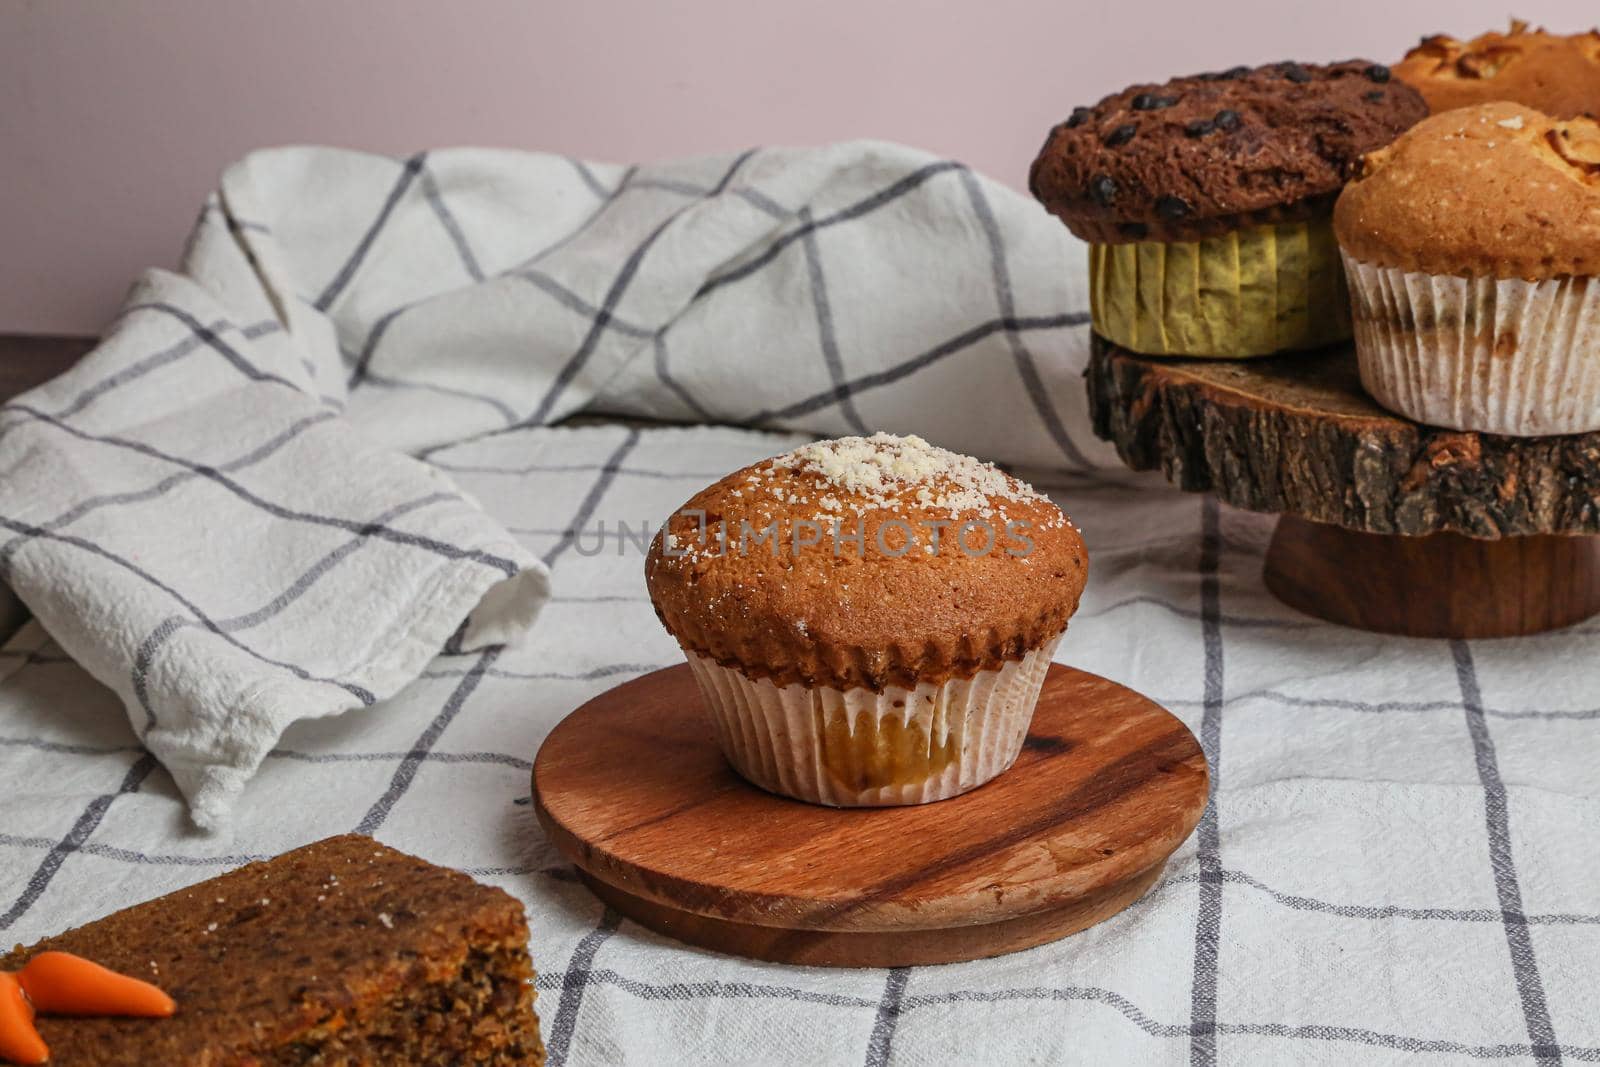 Chocolate muffin and walnut muffin, homemade bakery on dark background